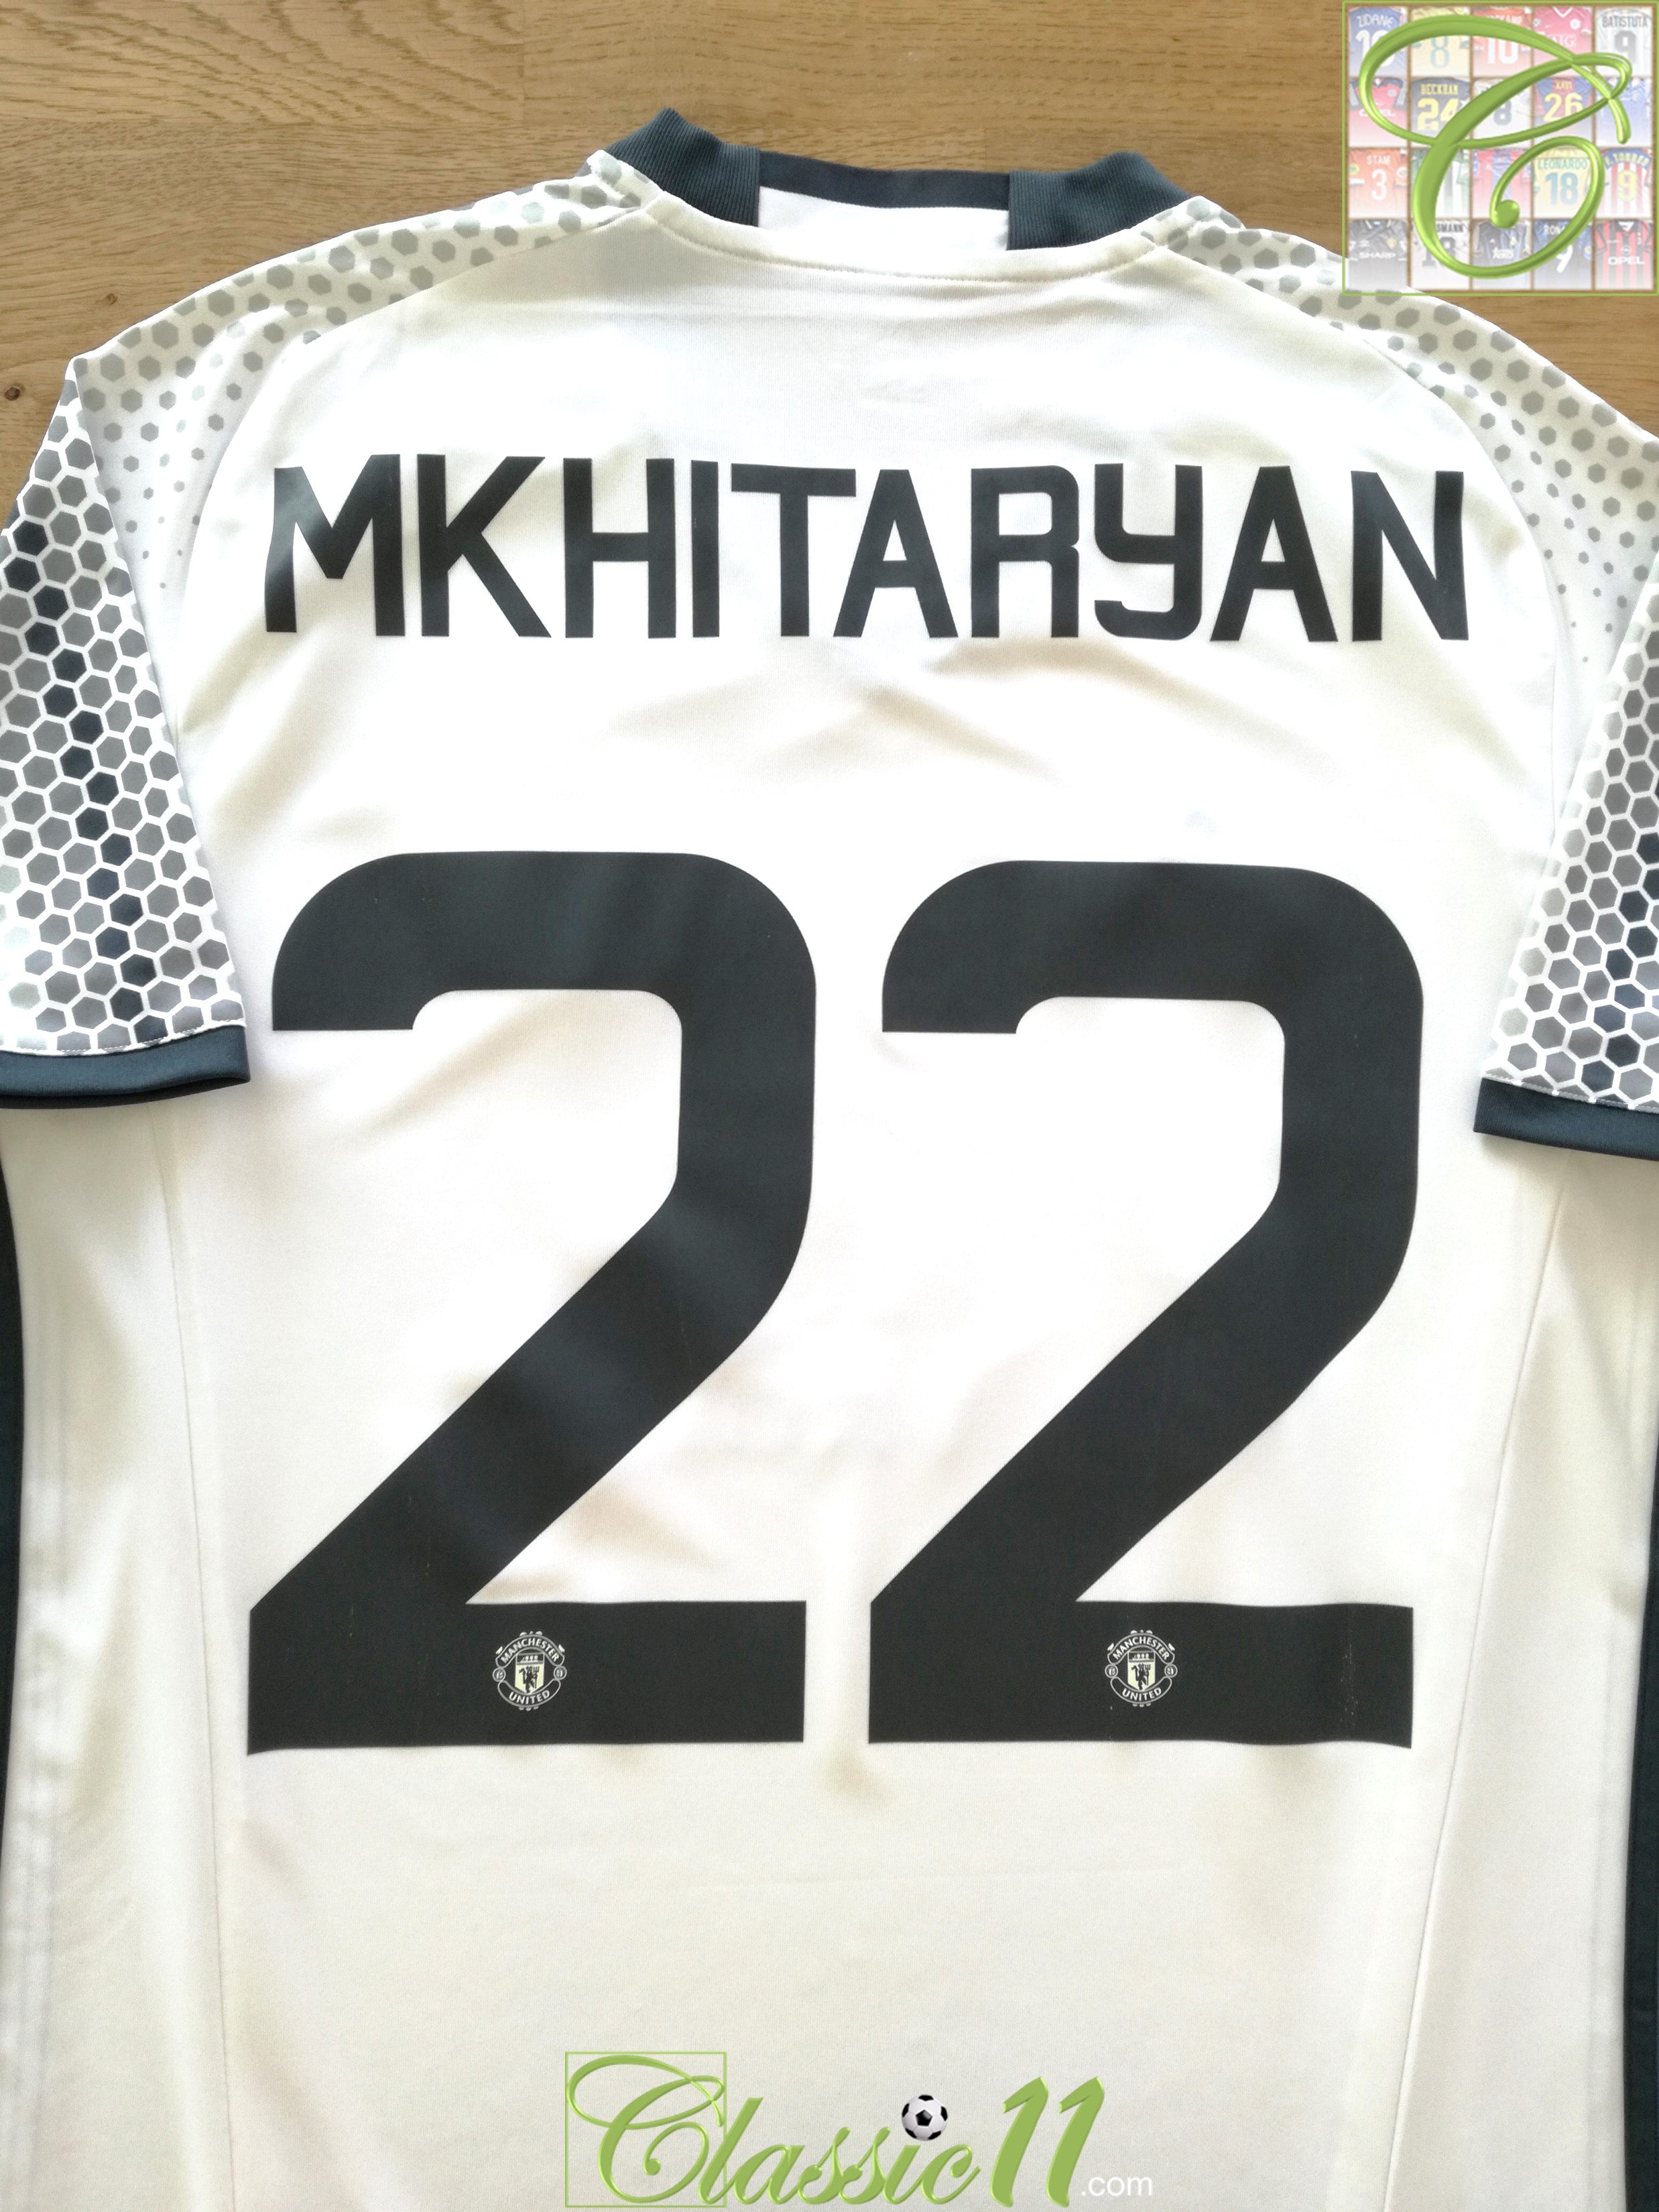 Henrikh Mkhitaryan's rise to stardom - Football Shirt Collective